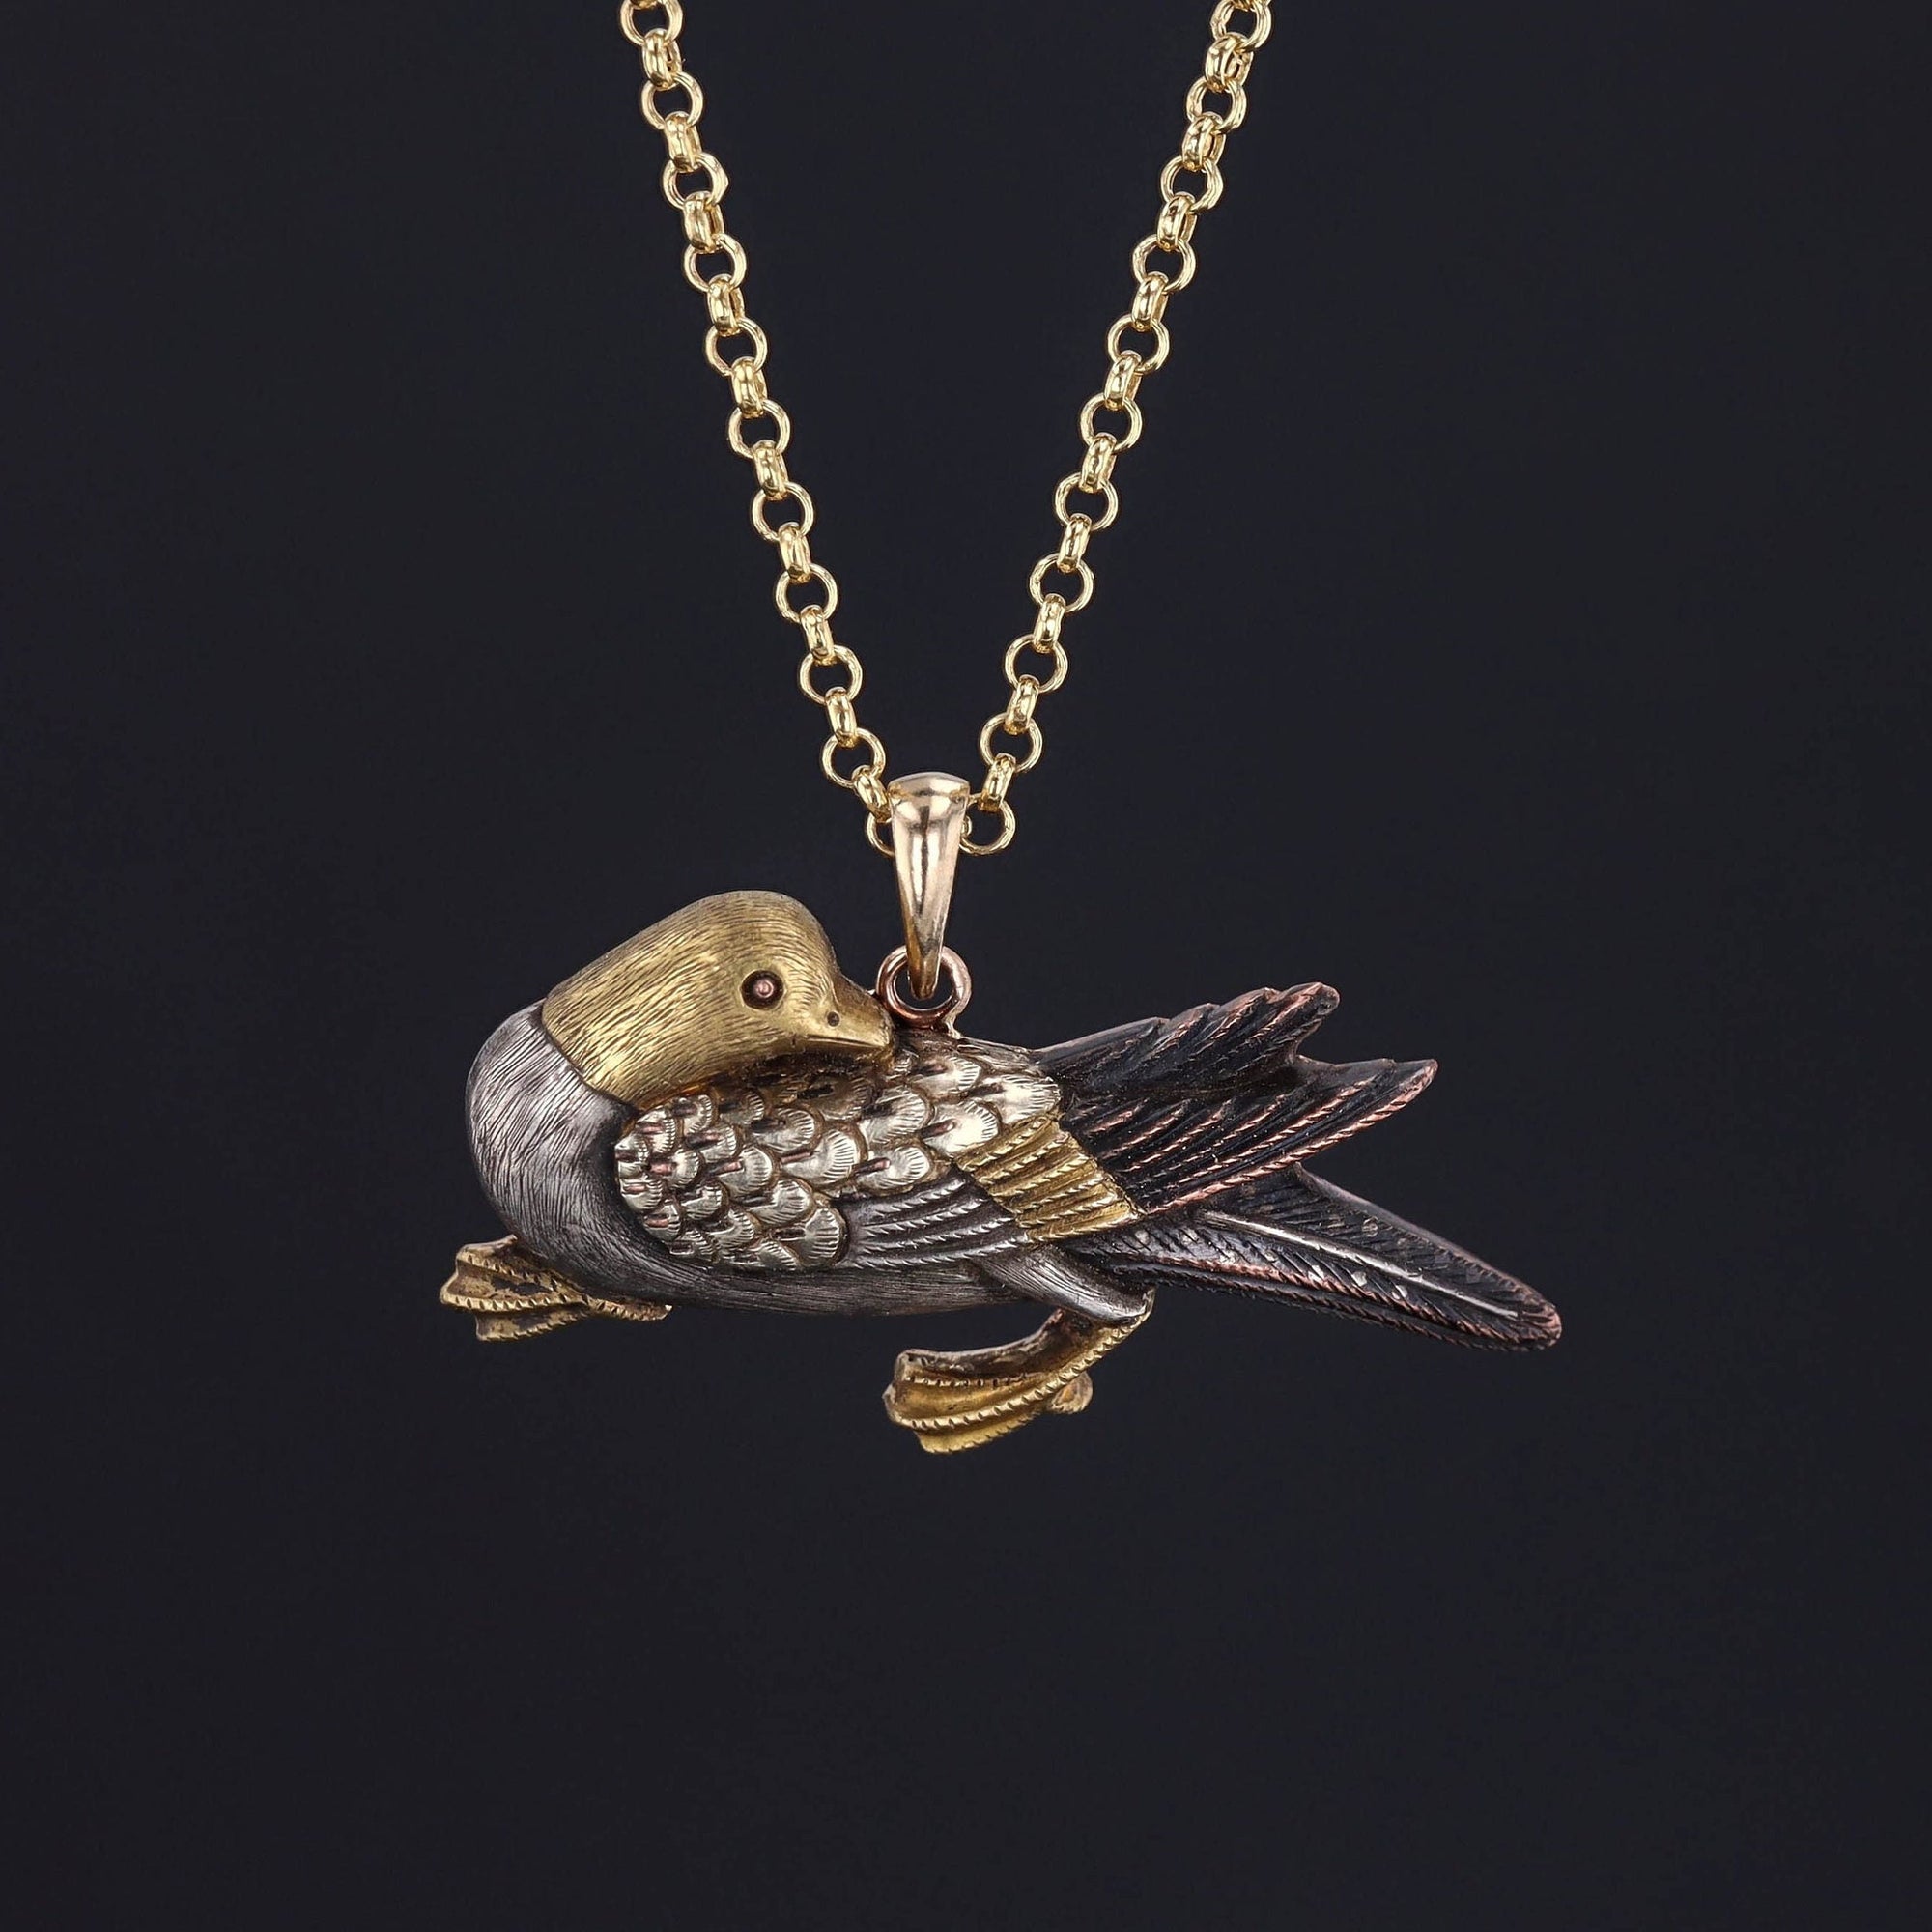 Antique Shakudo Bird Pendant Mounted in 14k Gold on Optional 10k Chain